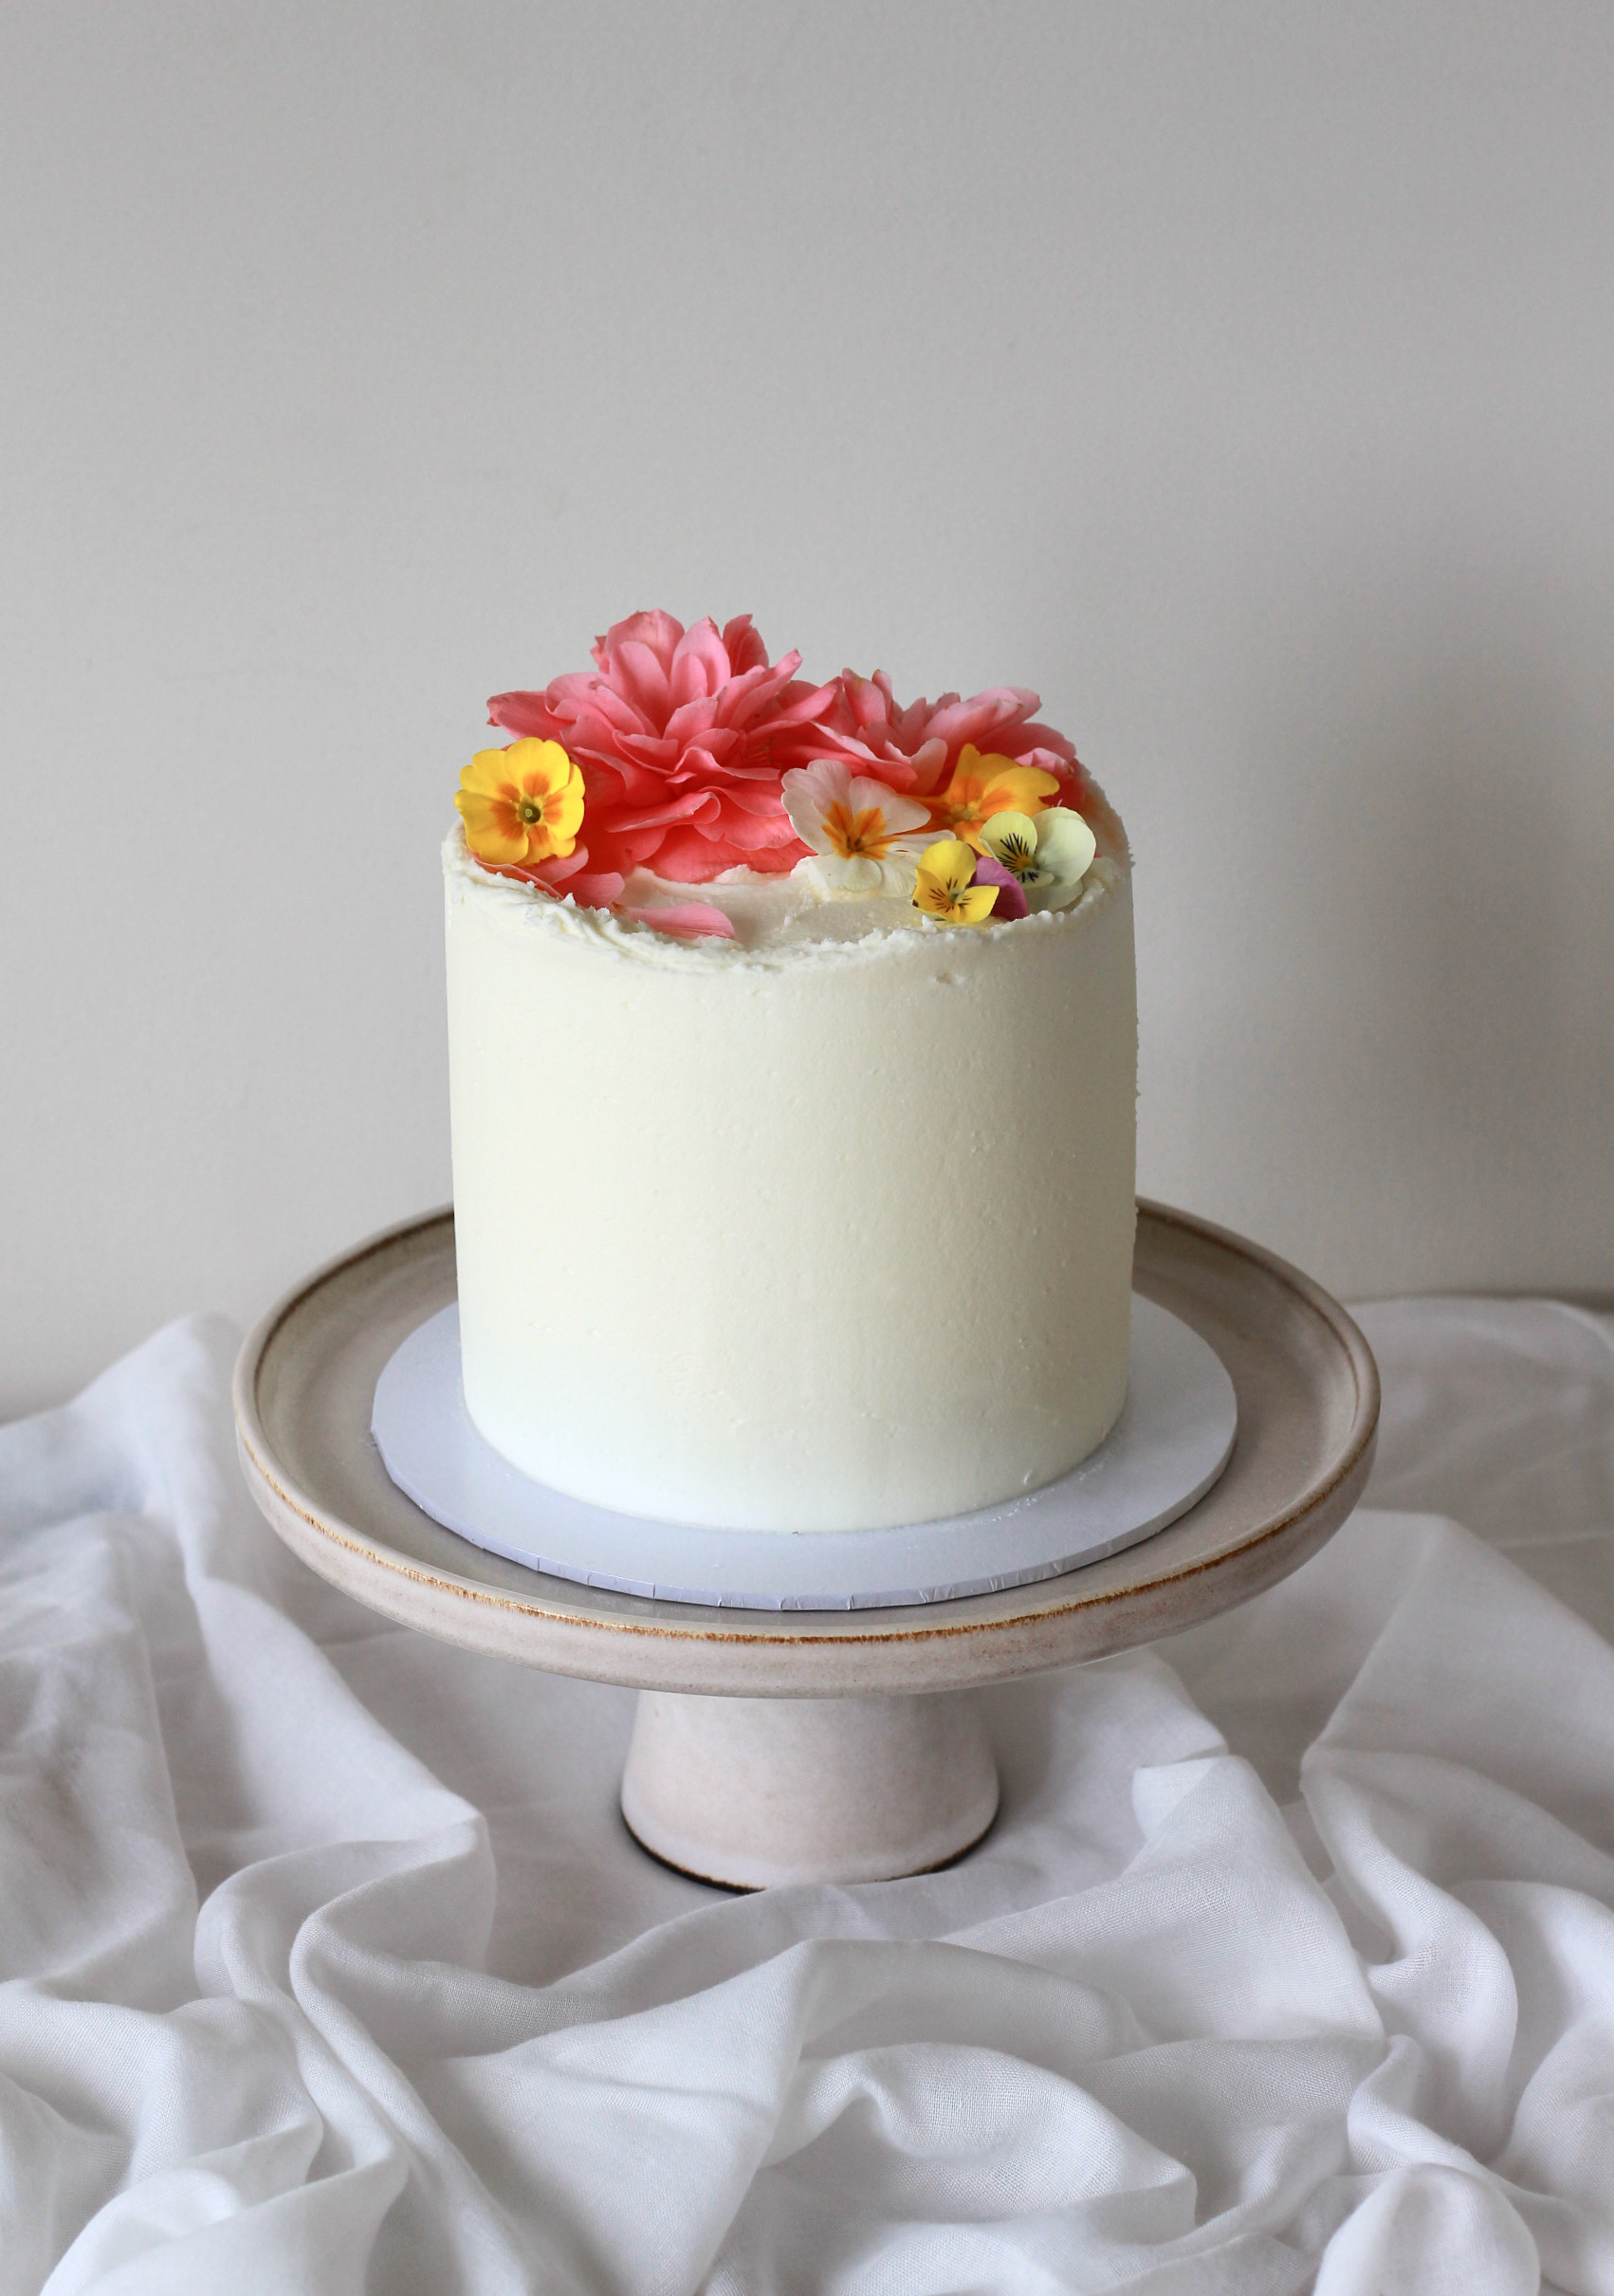 Lemon and elderflower cake with edible flowers